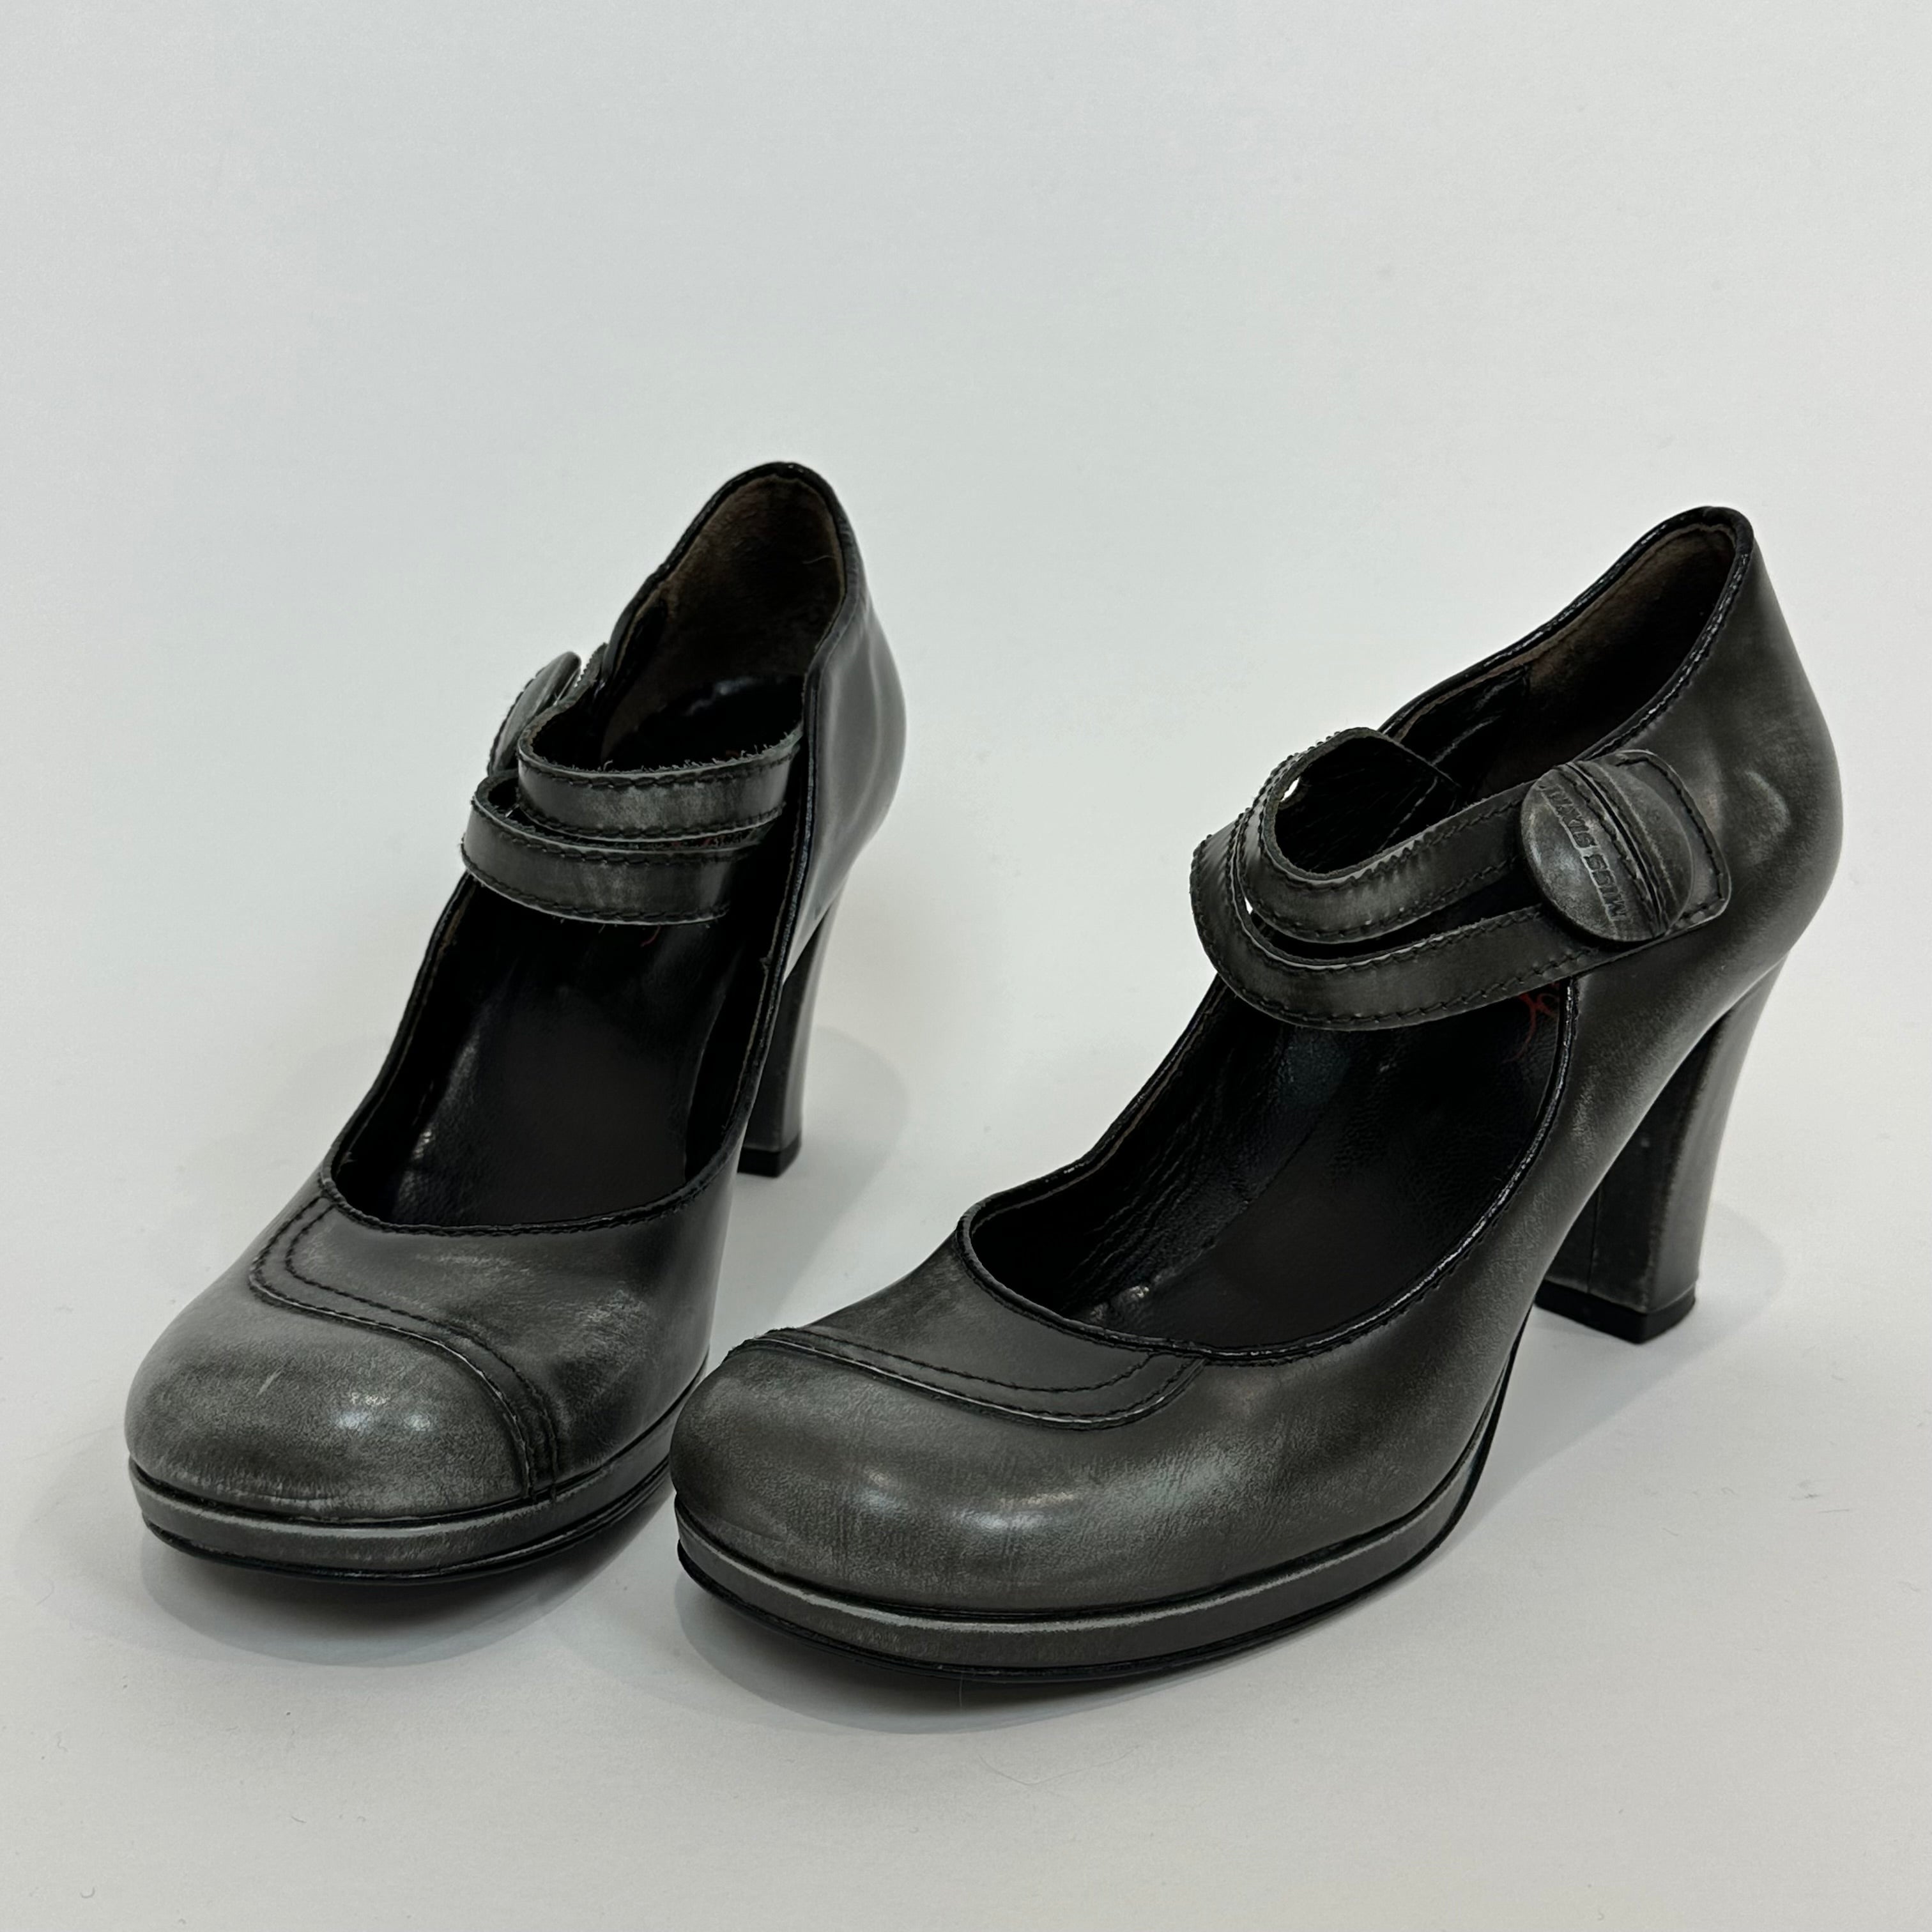 Miss Sixty Mary-Jane Style Heels (8)